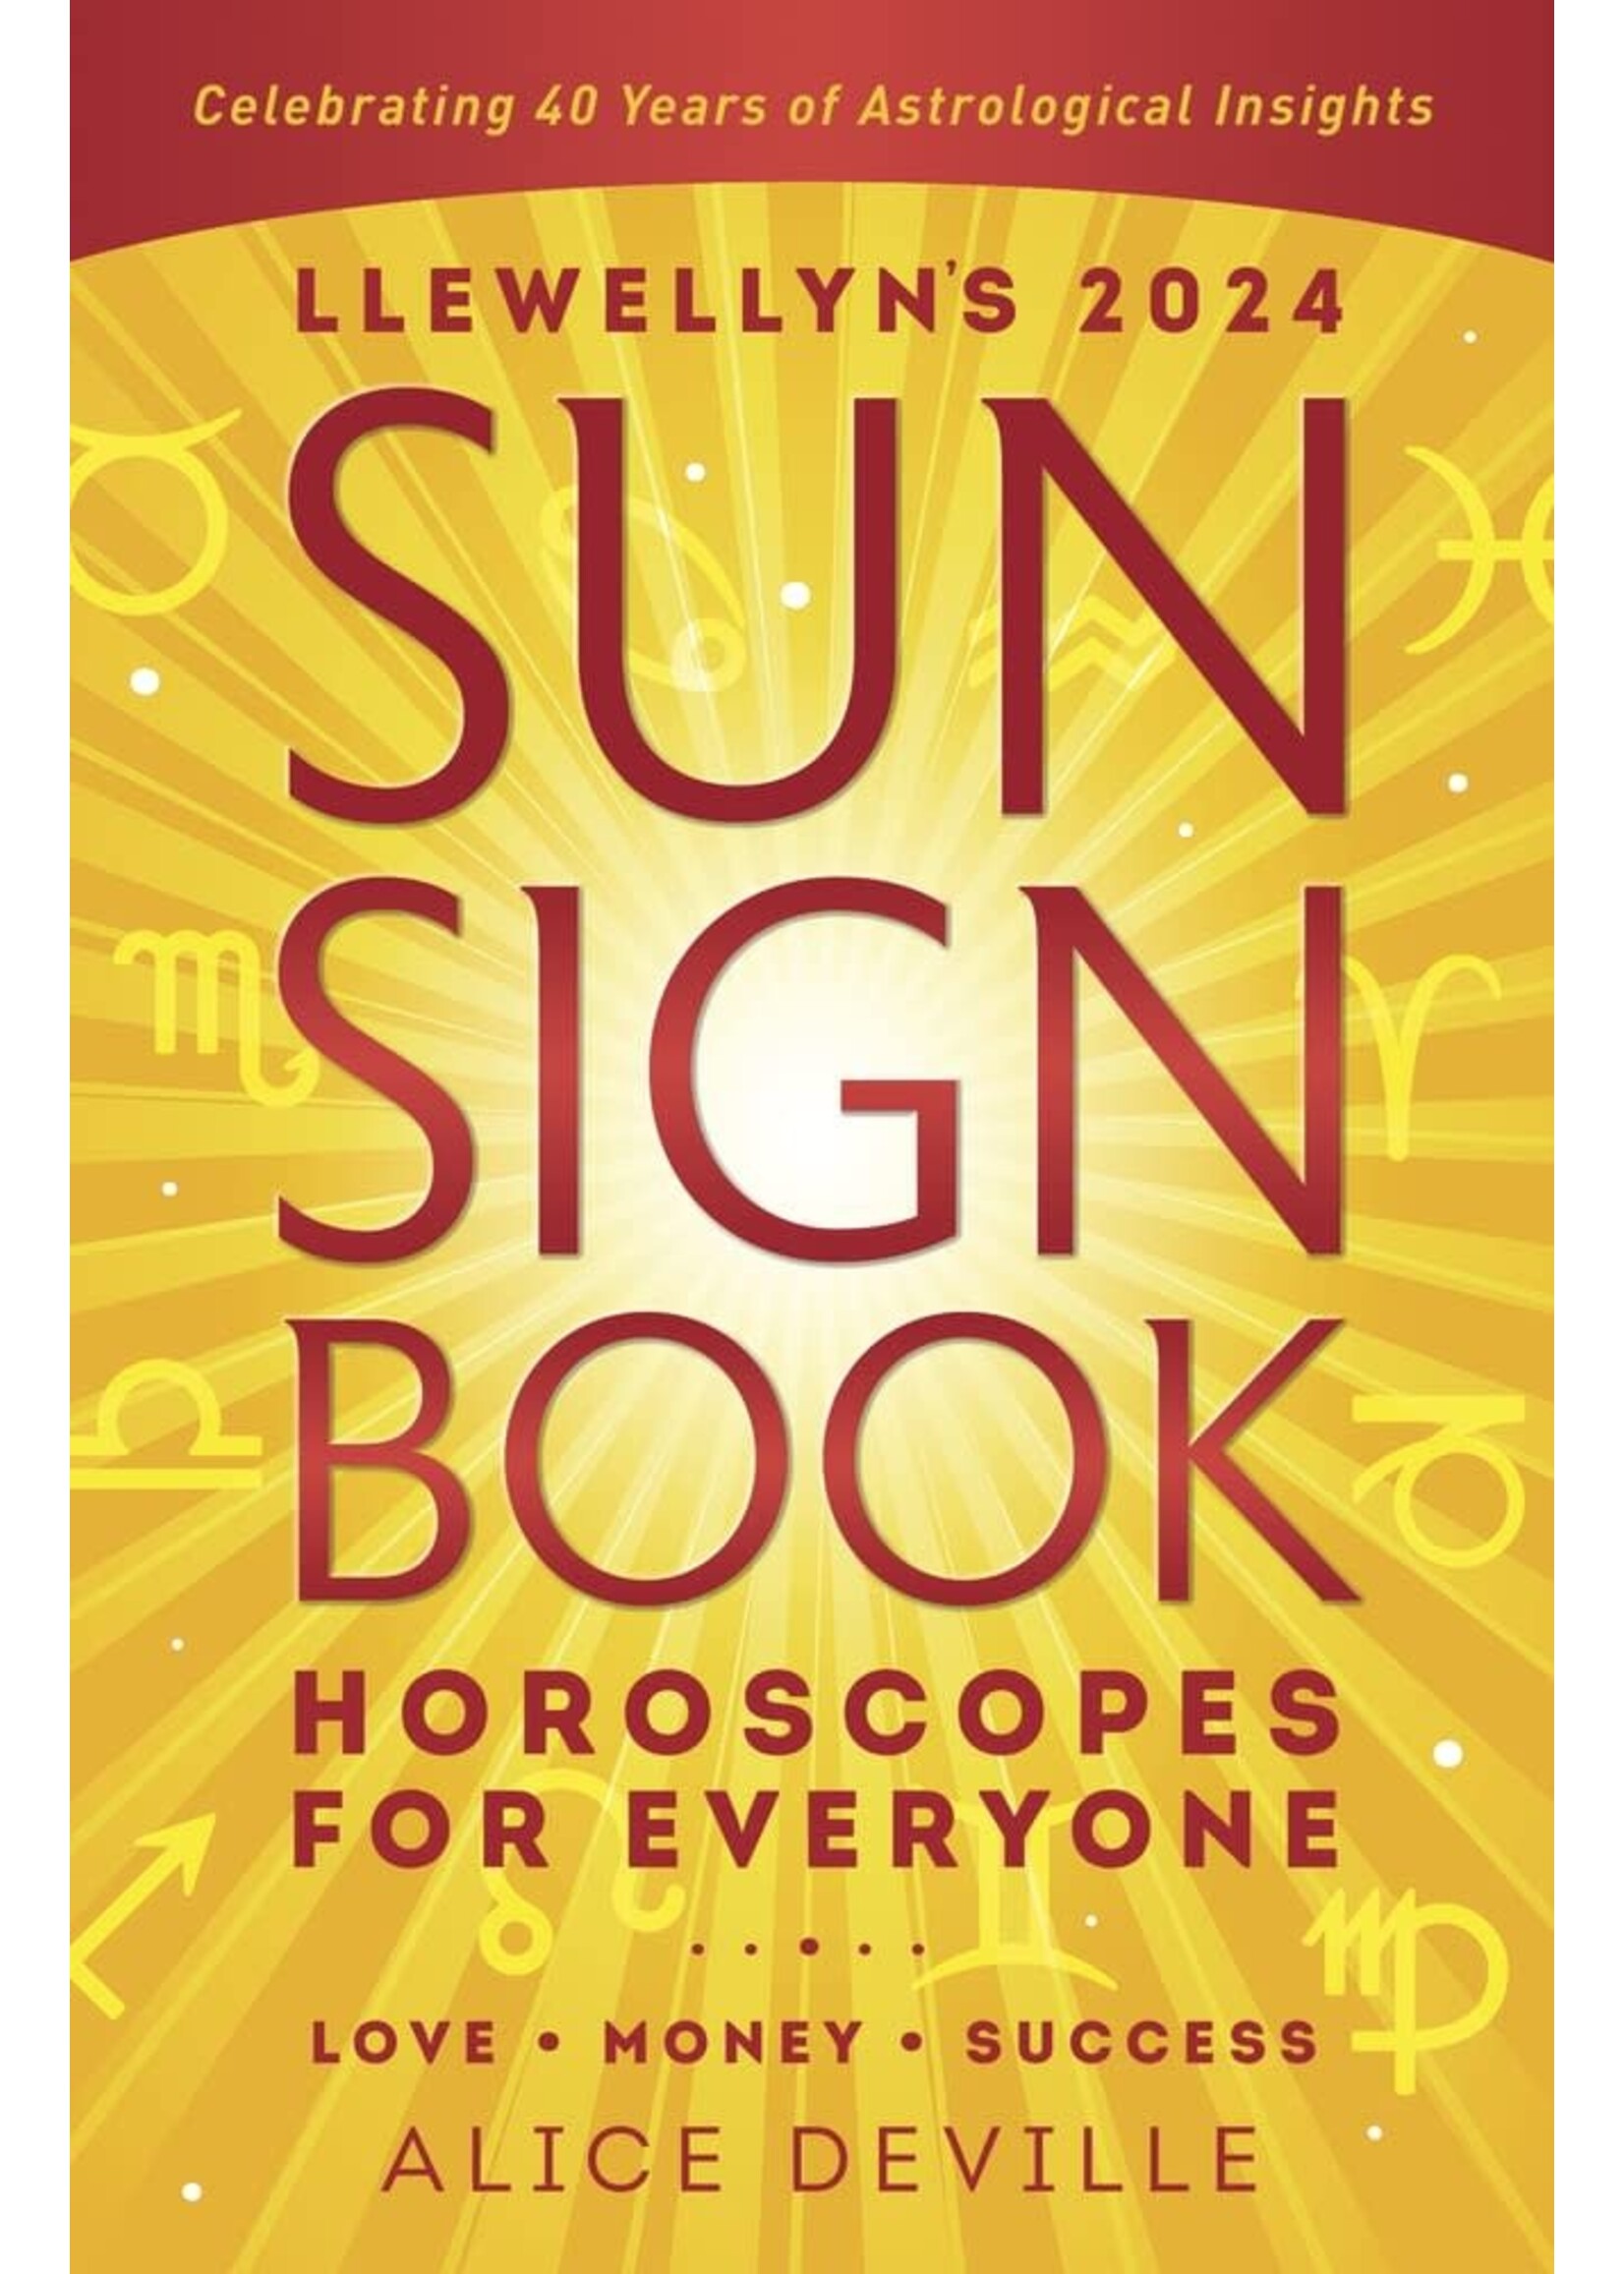 Llewellyn's 2024 Sun Sign Book Horoscopes  - BUY ON LLEWELLYN